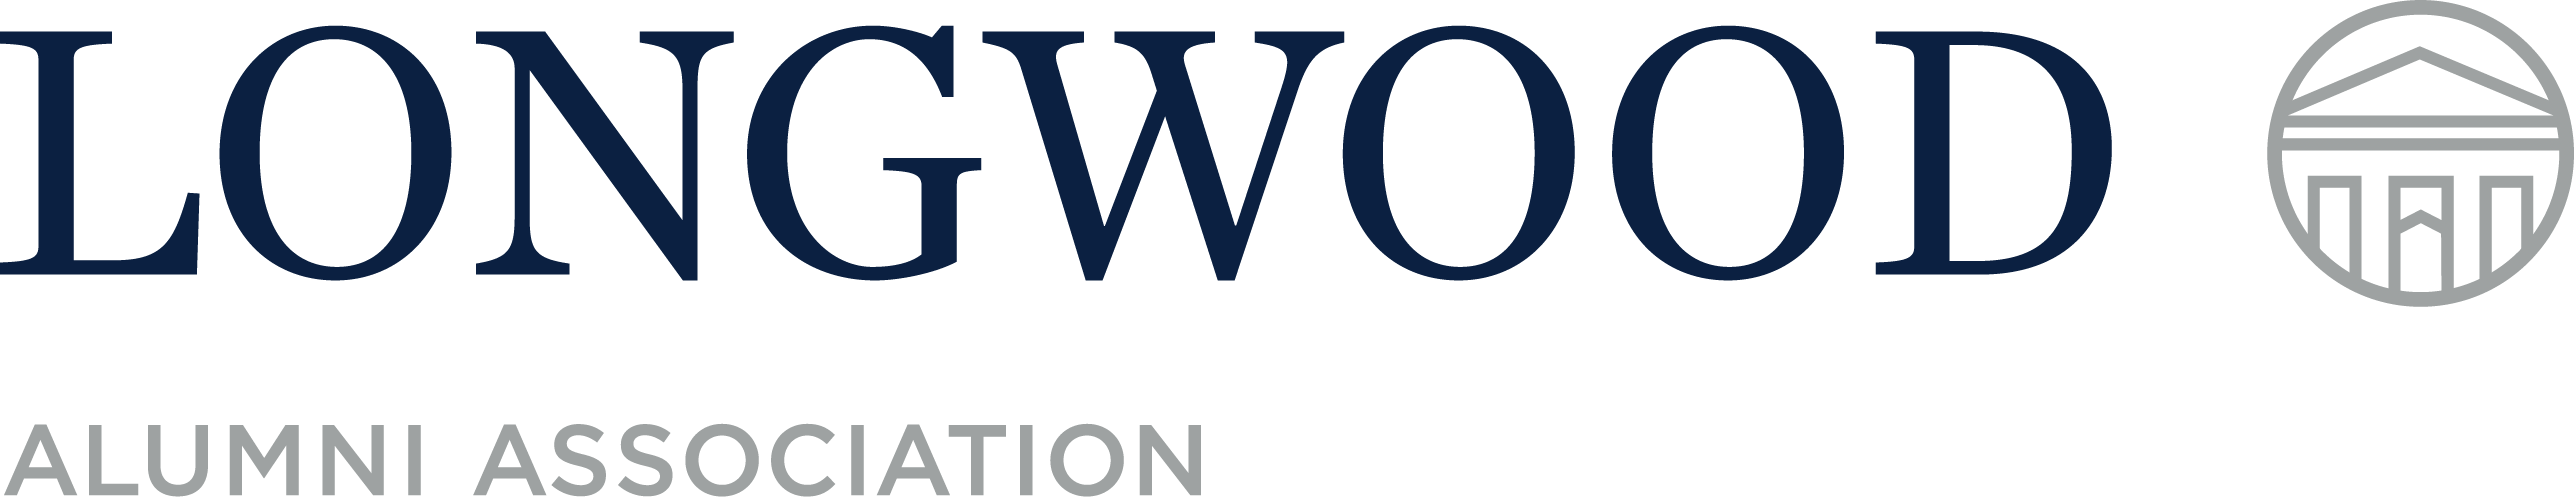 Longwood University Alumni Association